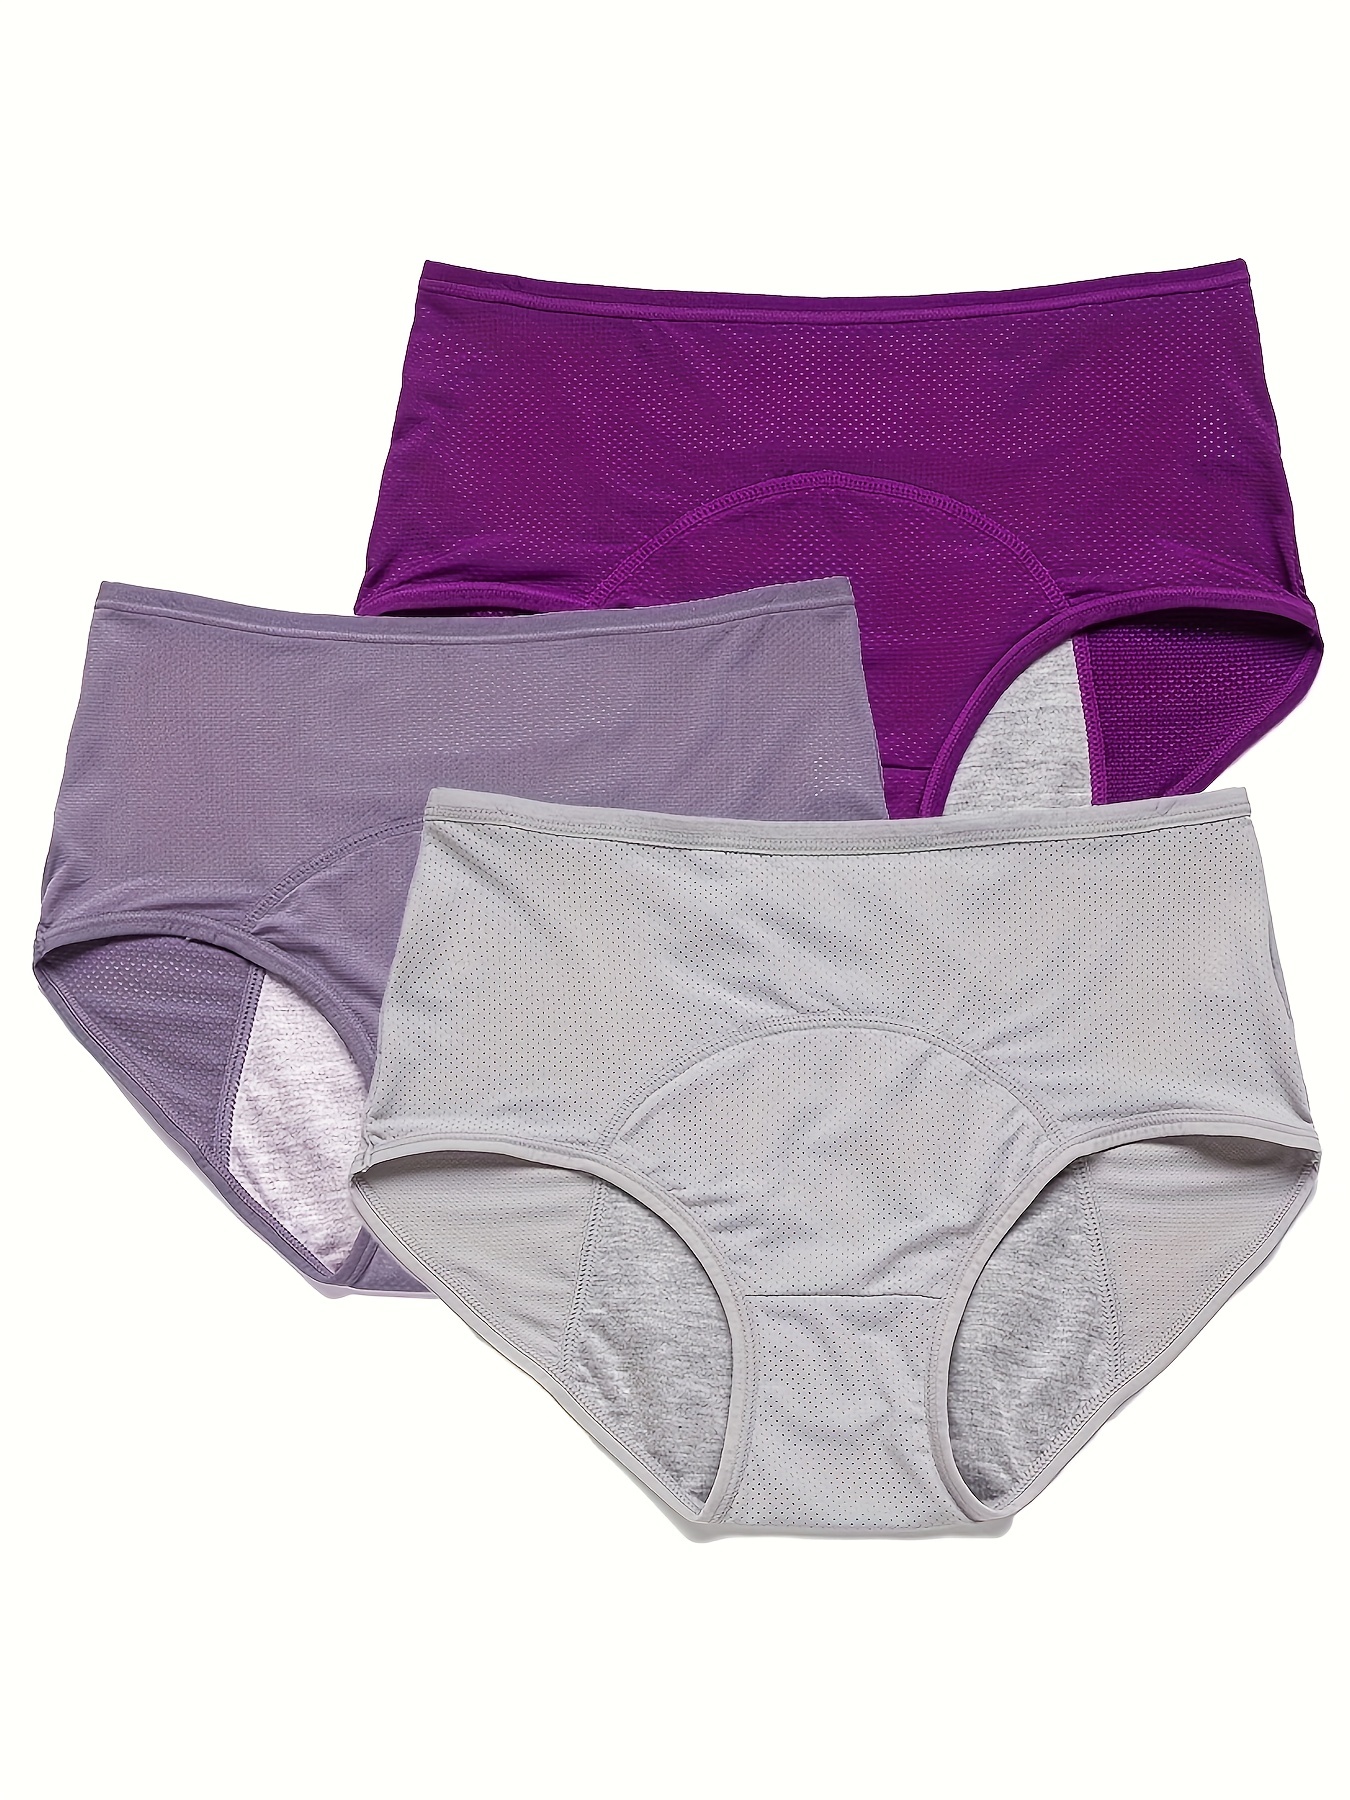 Bundle Packs, Womens Period & Incontinence Panties